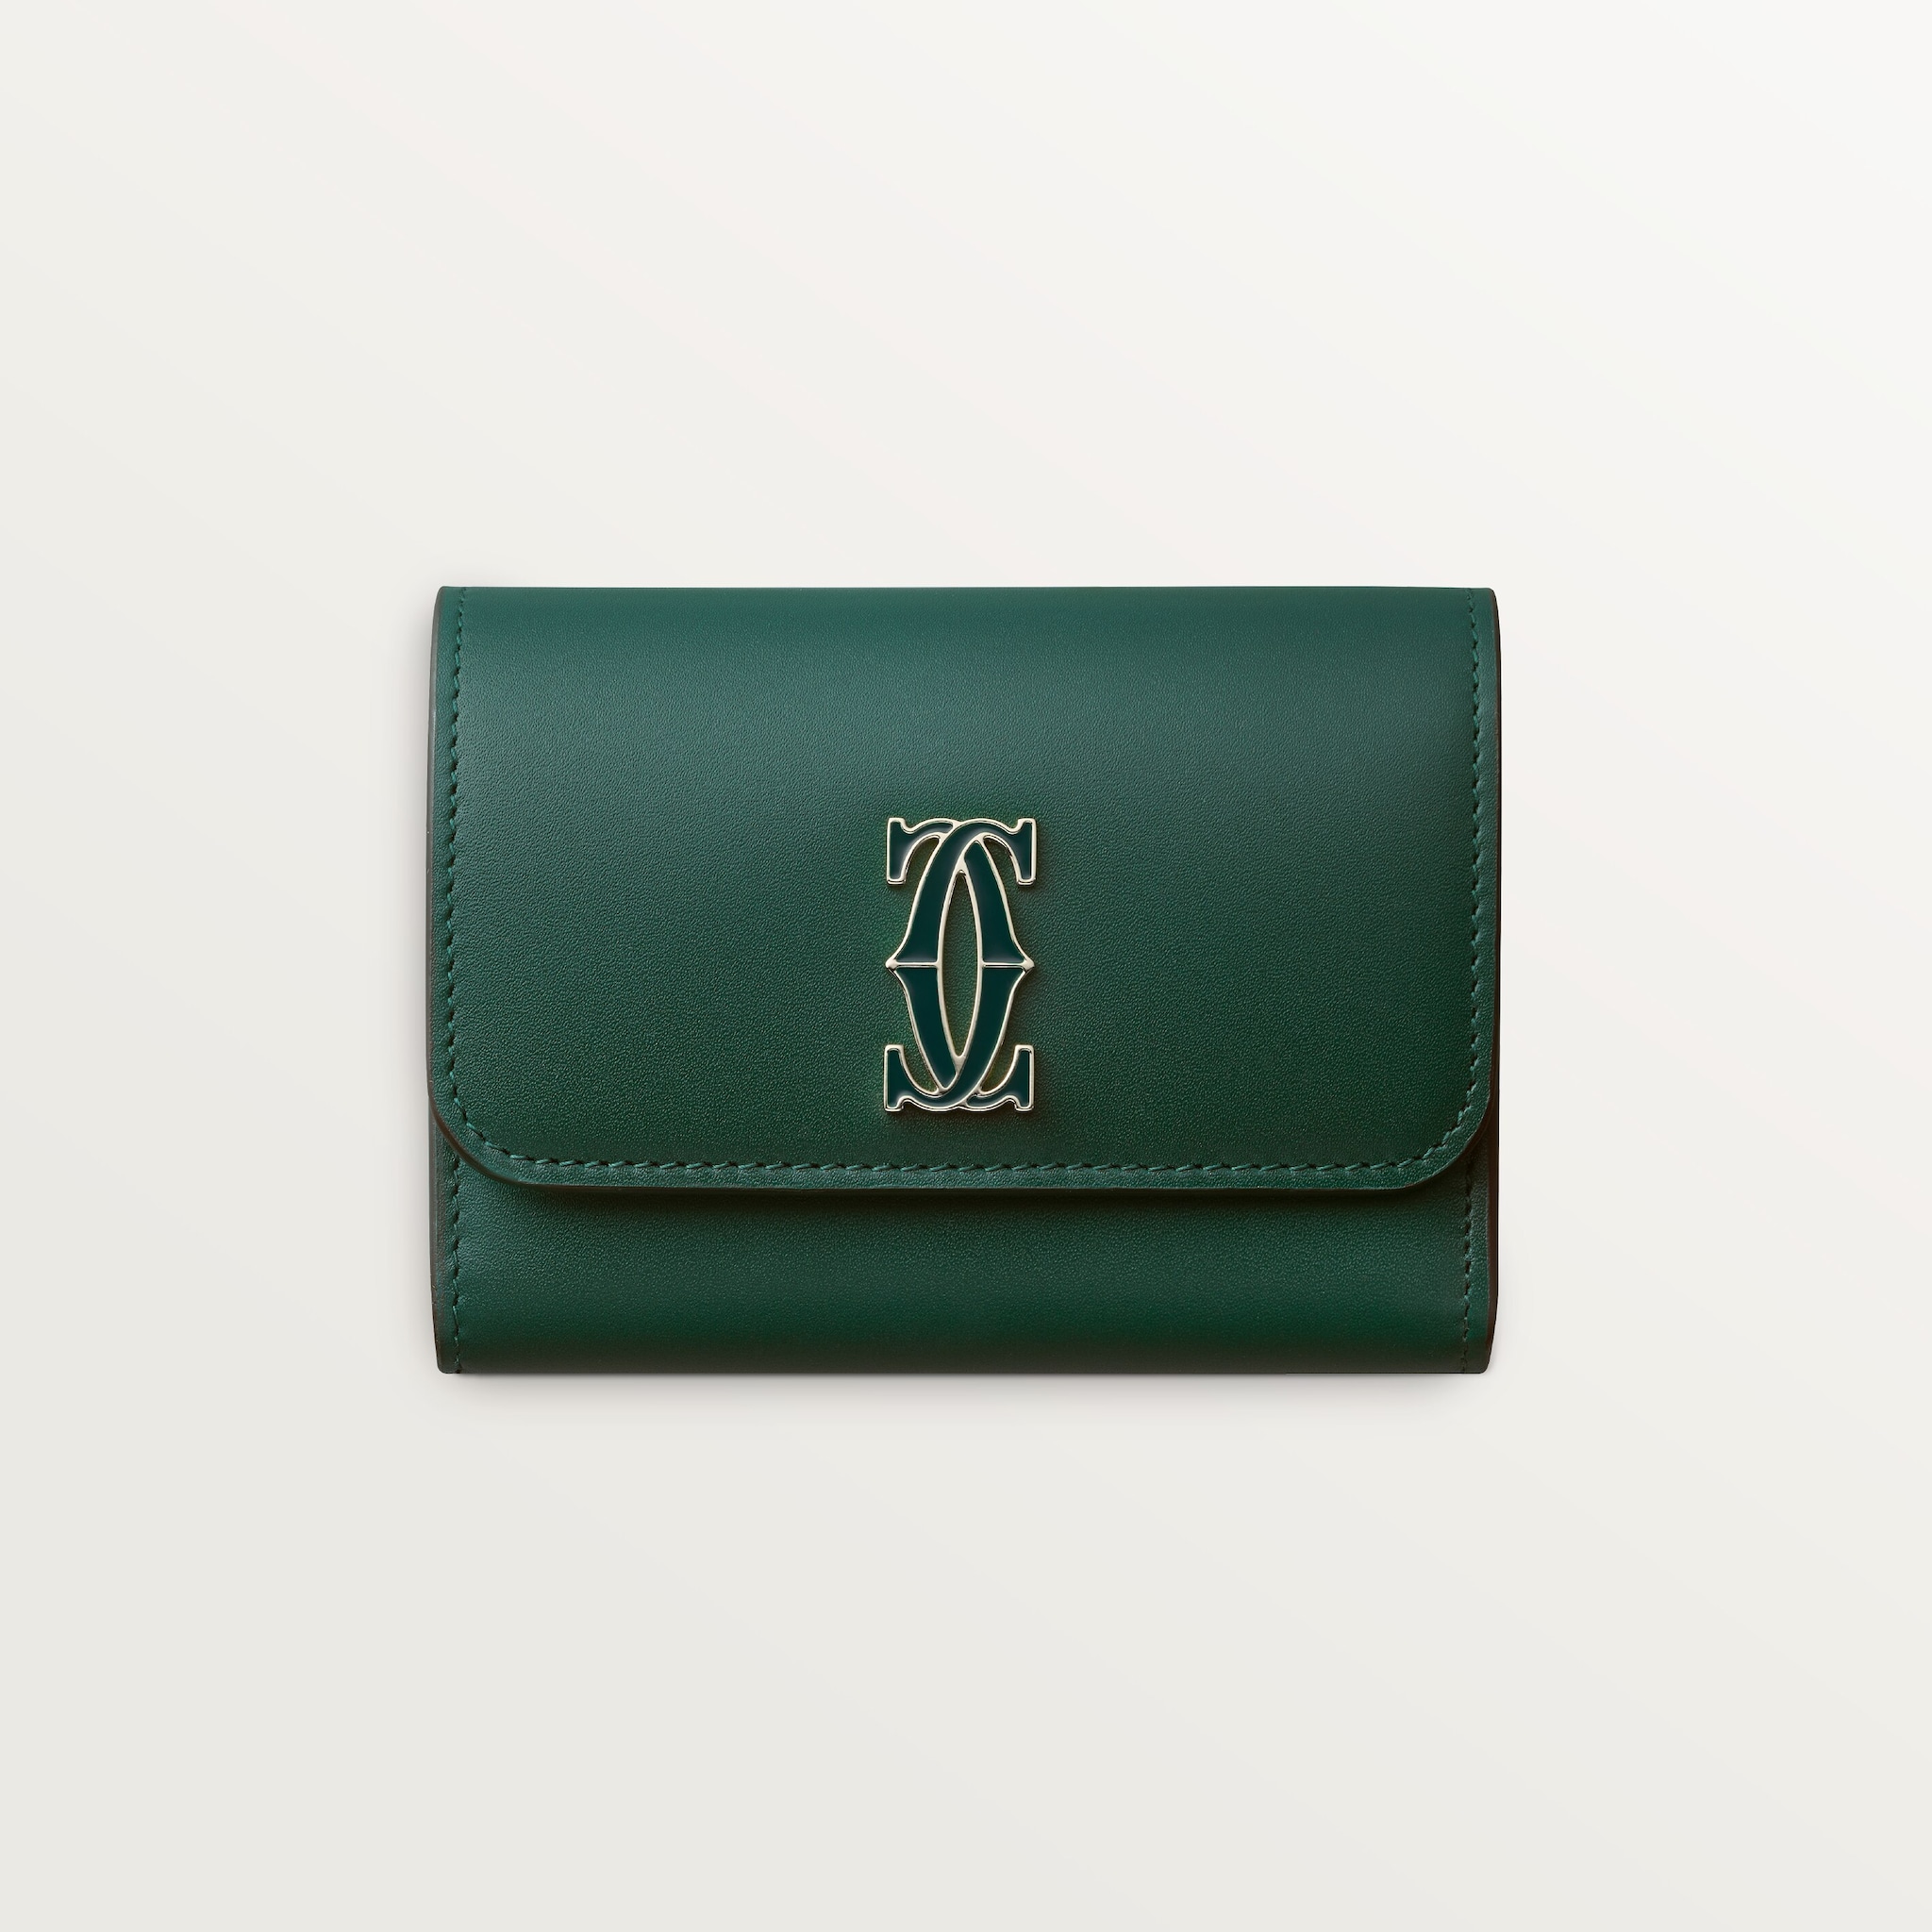 Mini wallet, C de CartierDark green calfskin, gold and dark green enamel finish